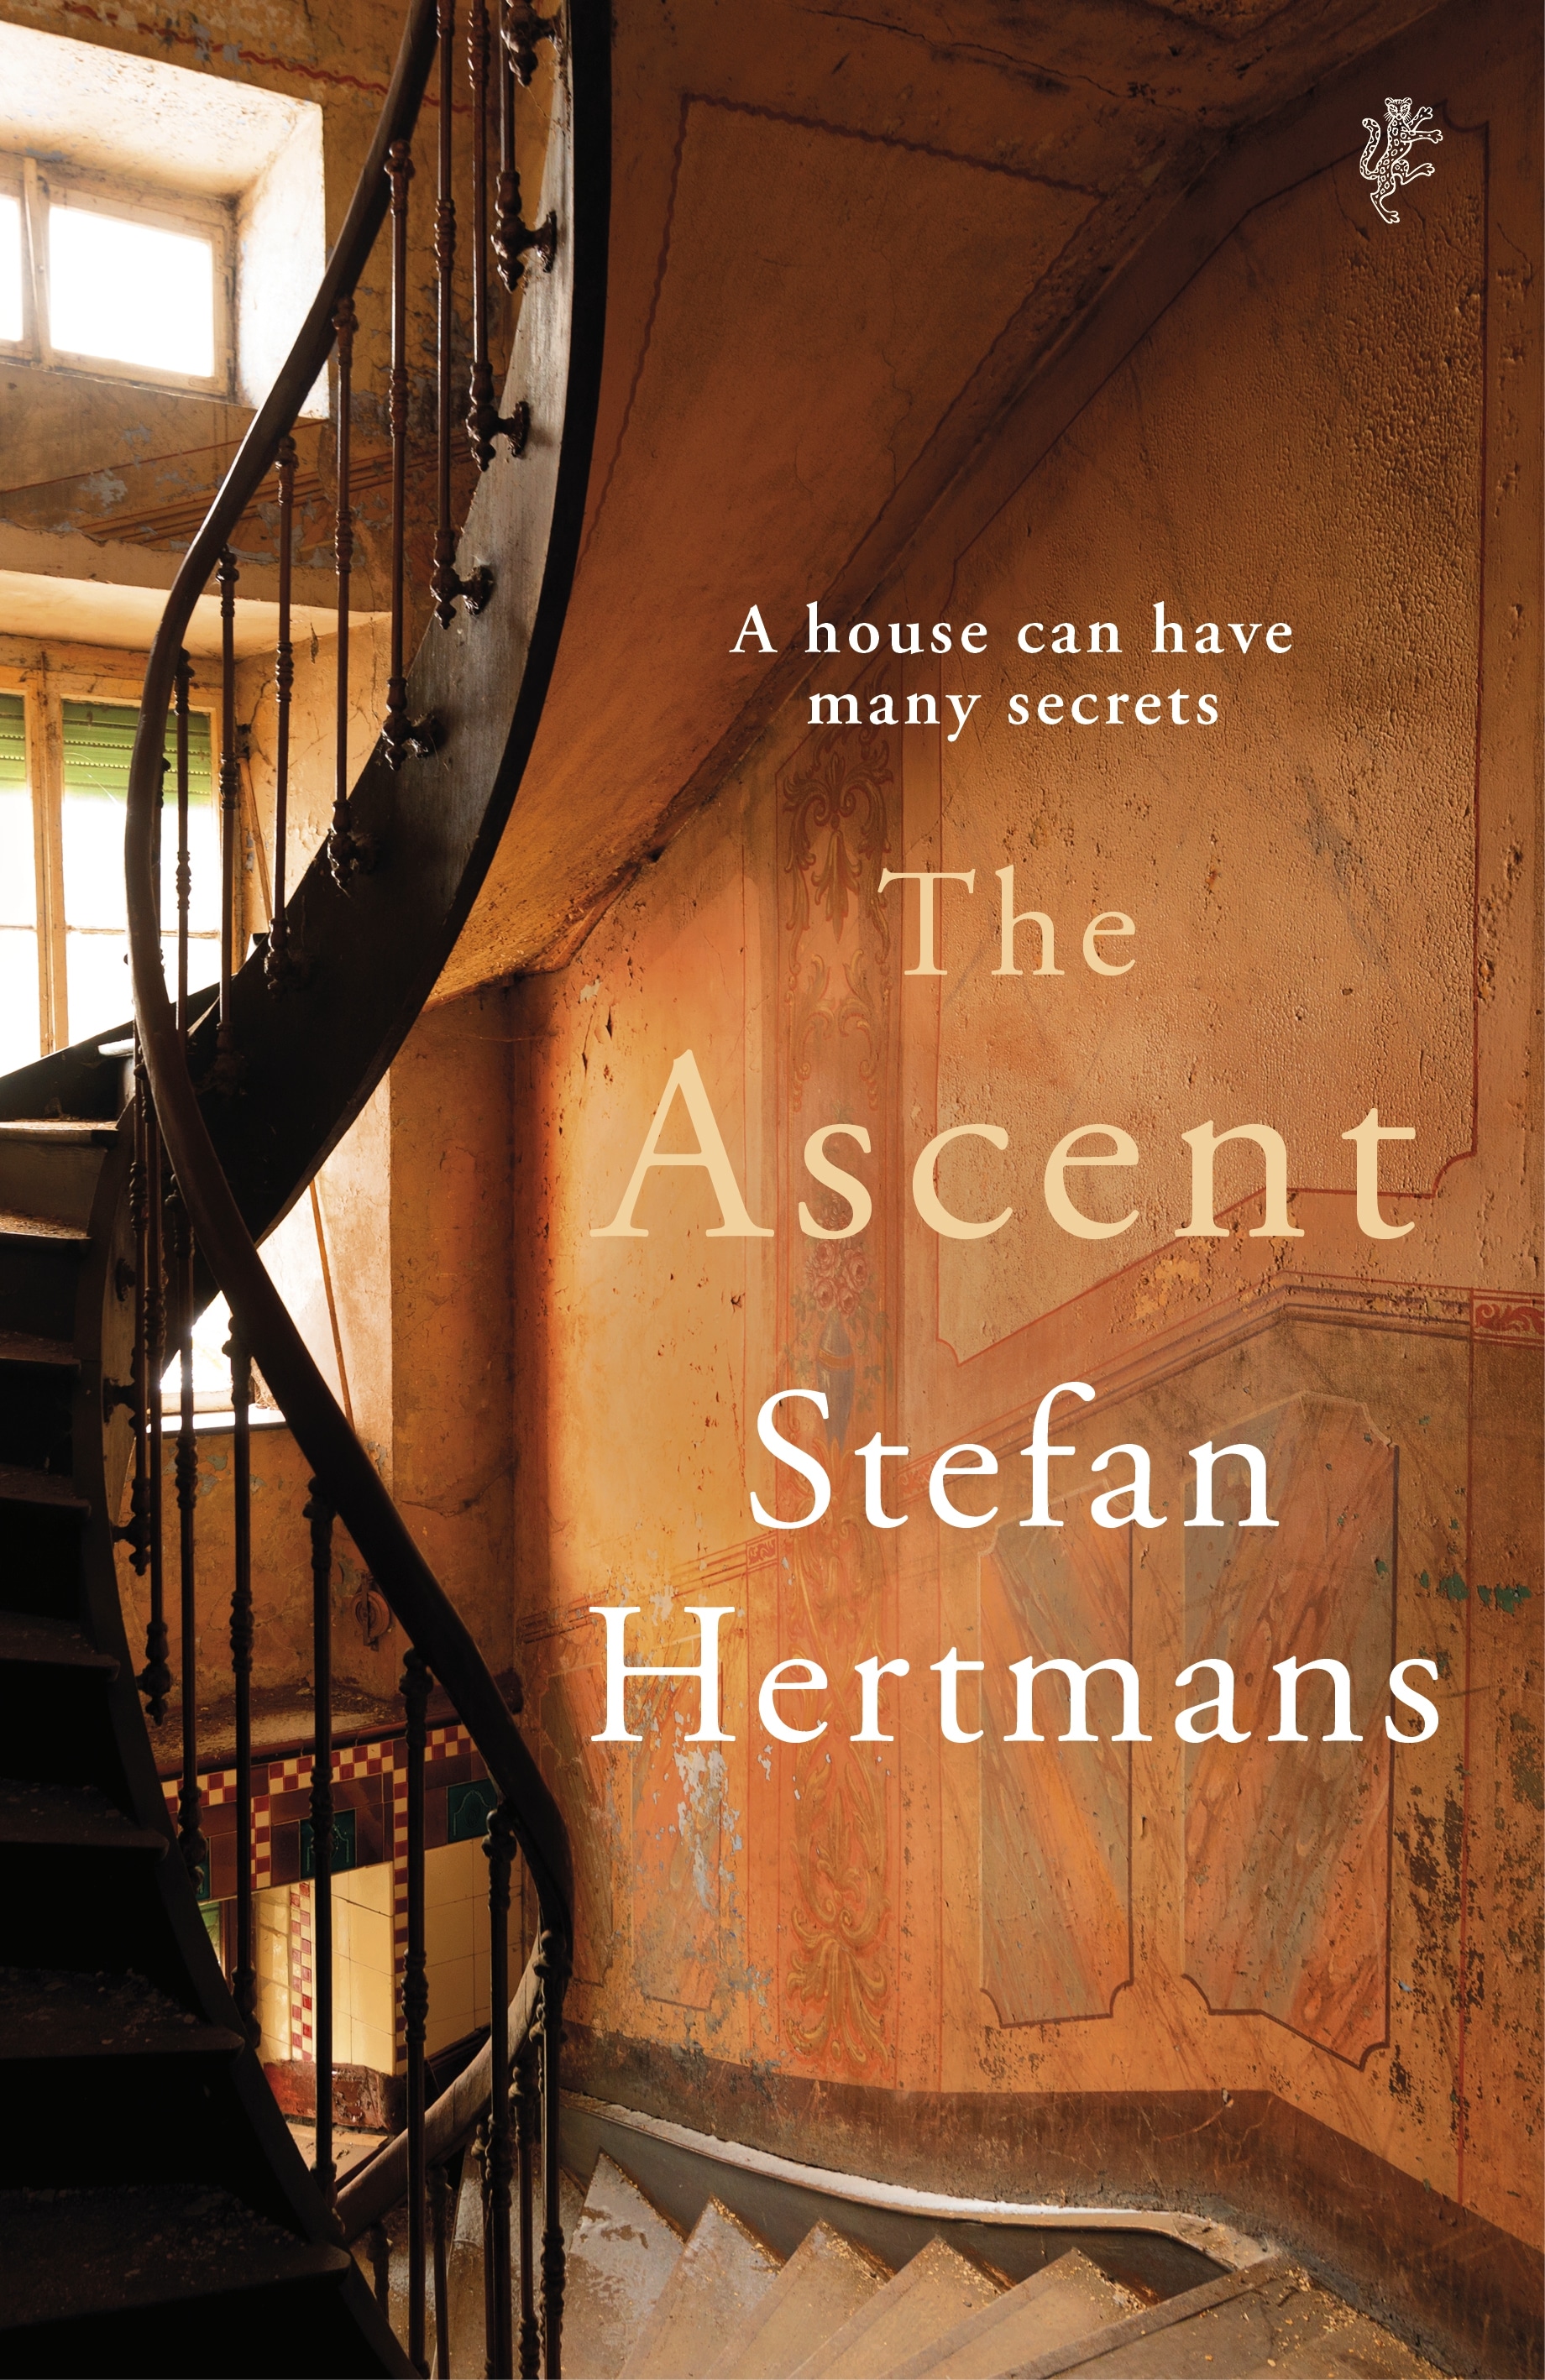 Book “The Ascent” by David McKay, Stefan Hertmans — November 10, 2022